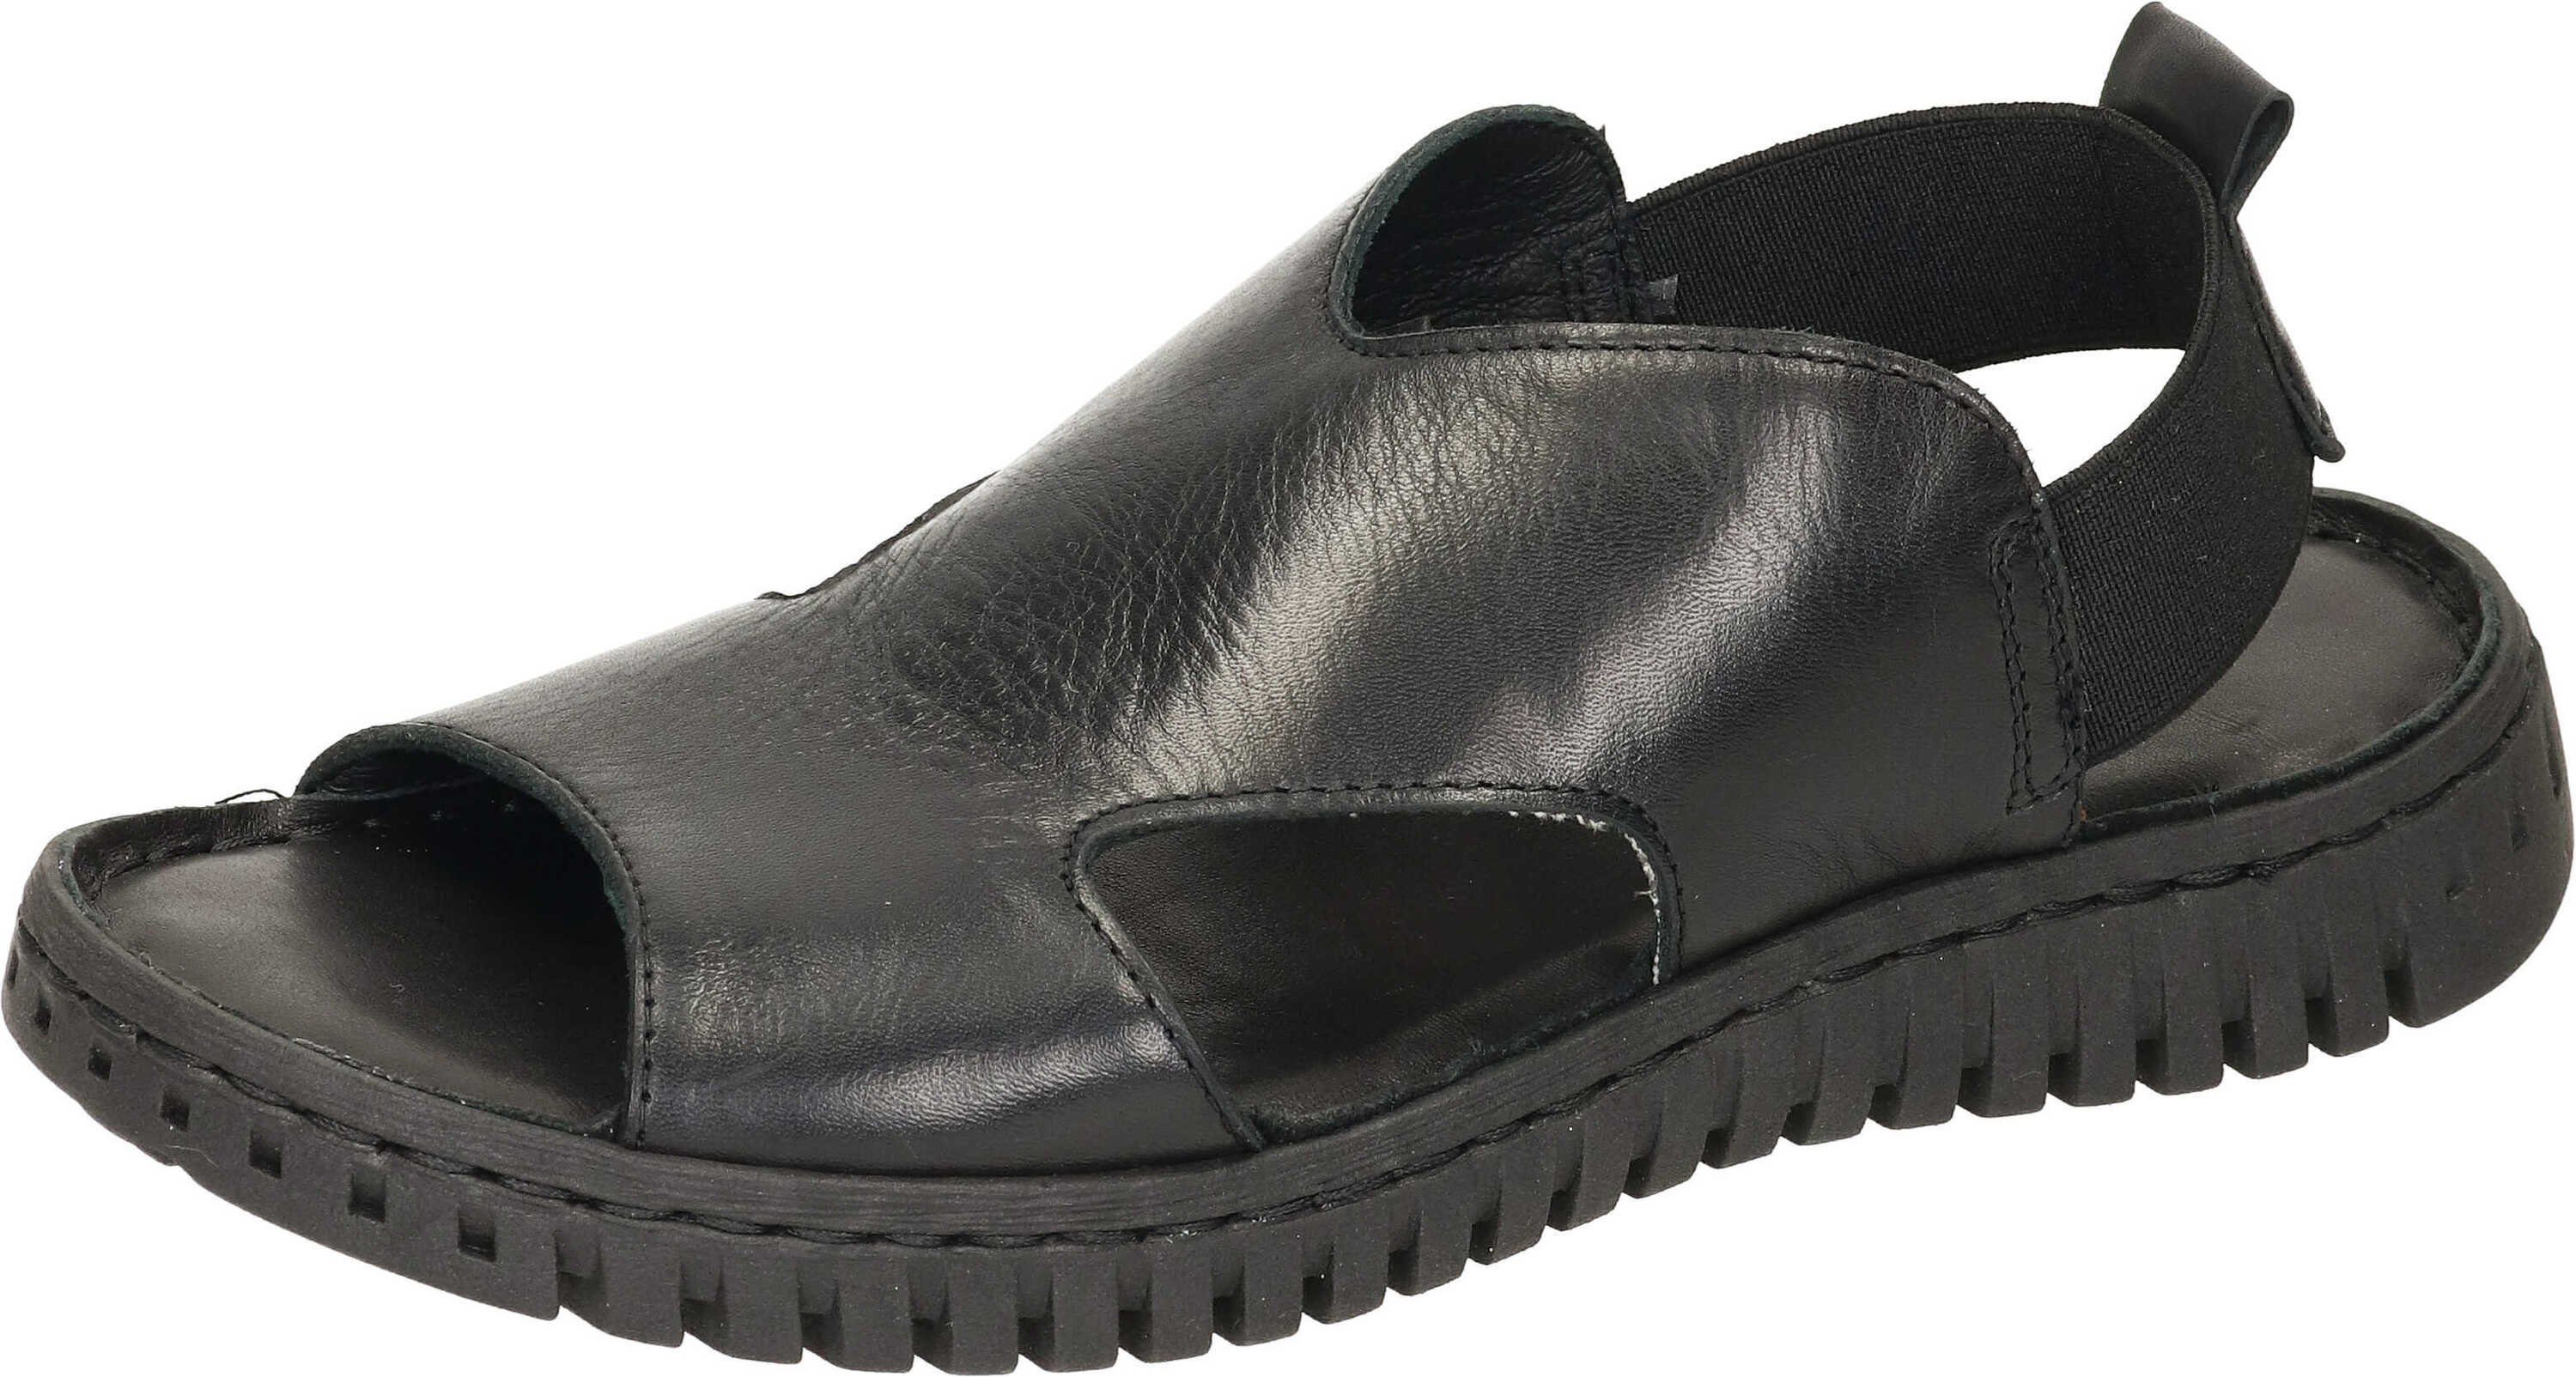 Manitu Sandalen Sandalette aus echtem Leder schwarz